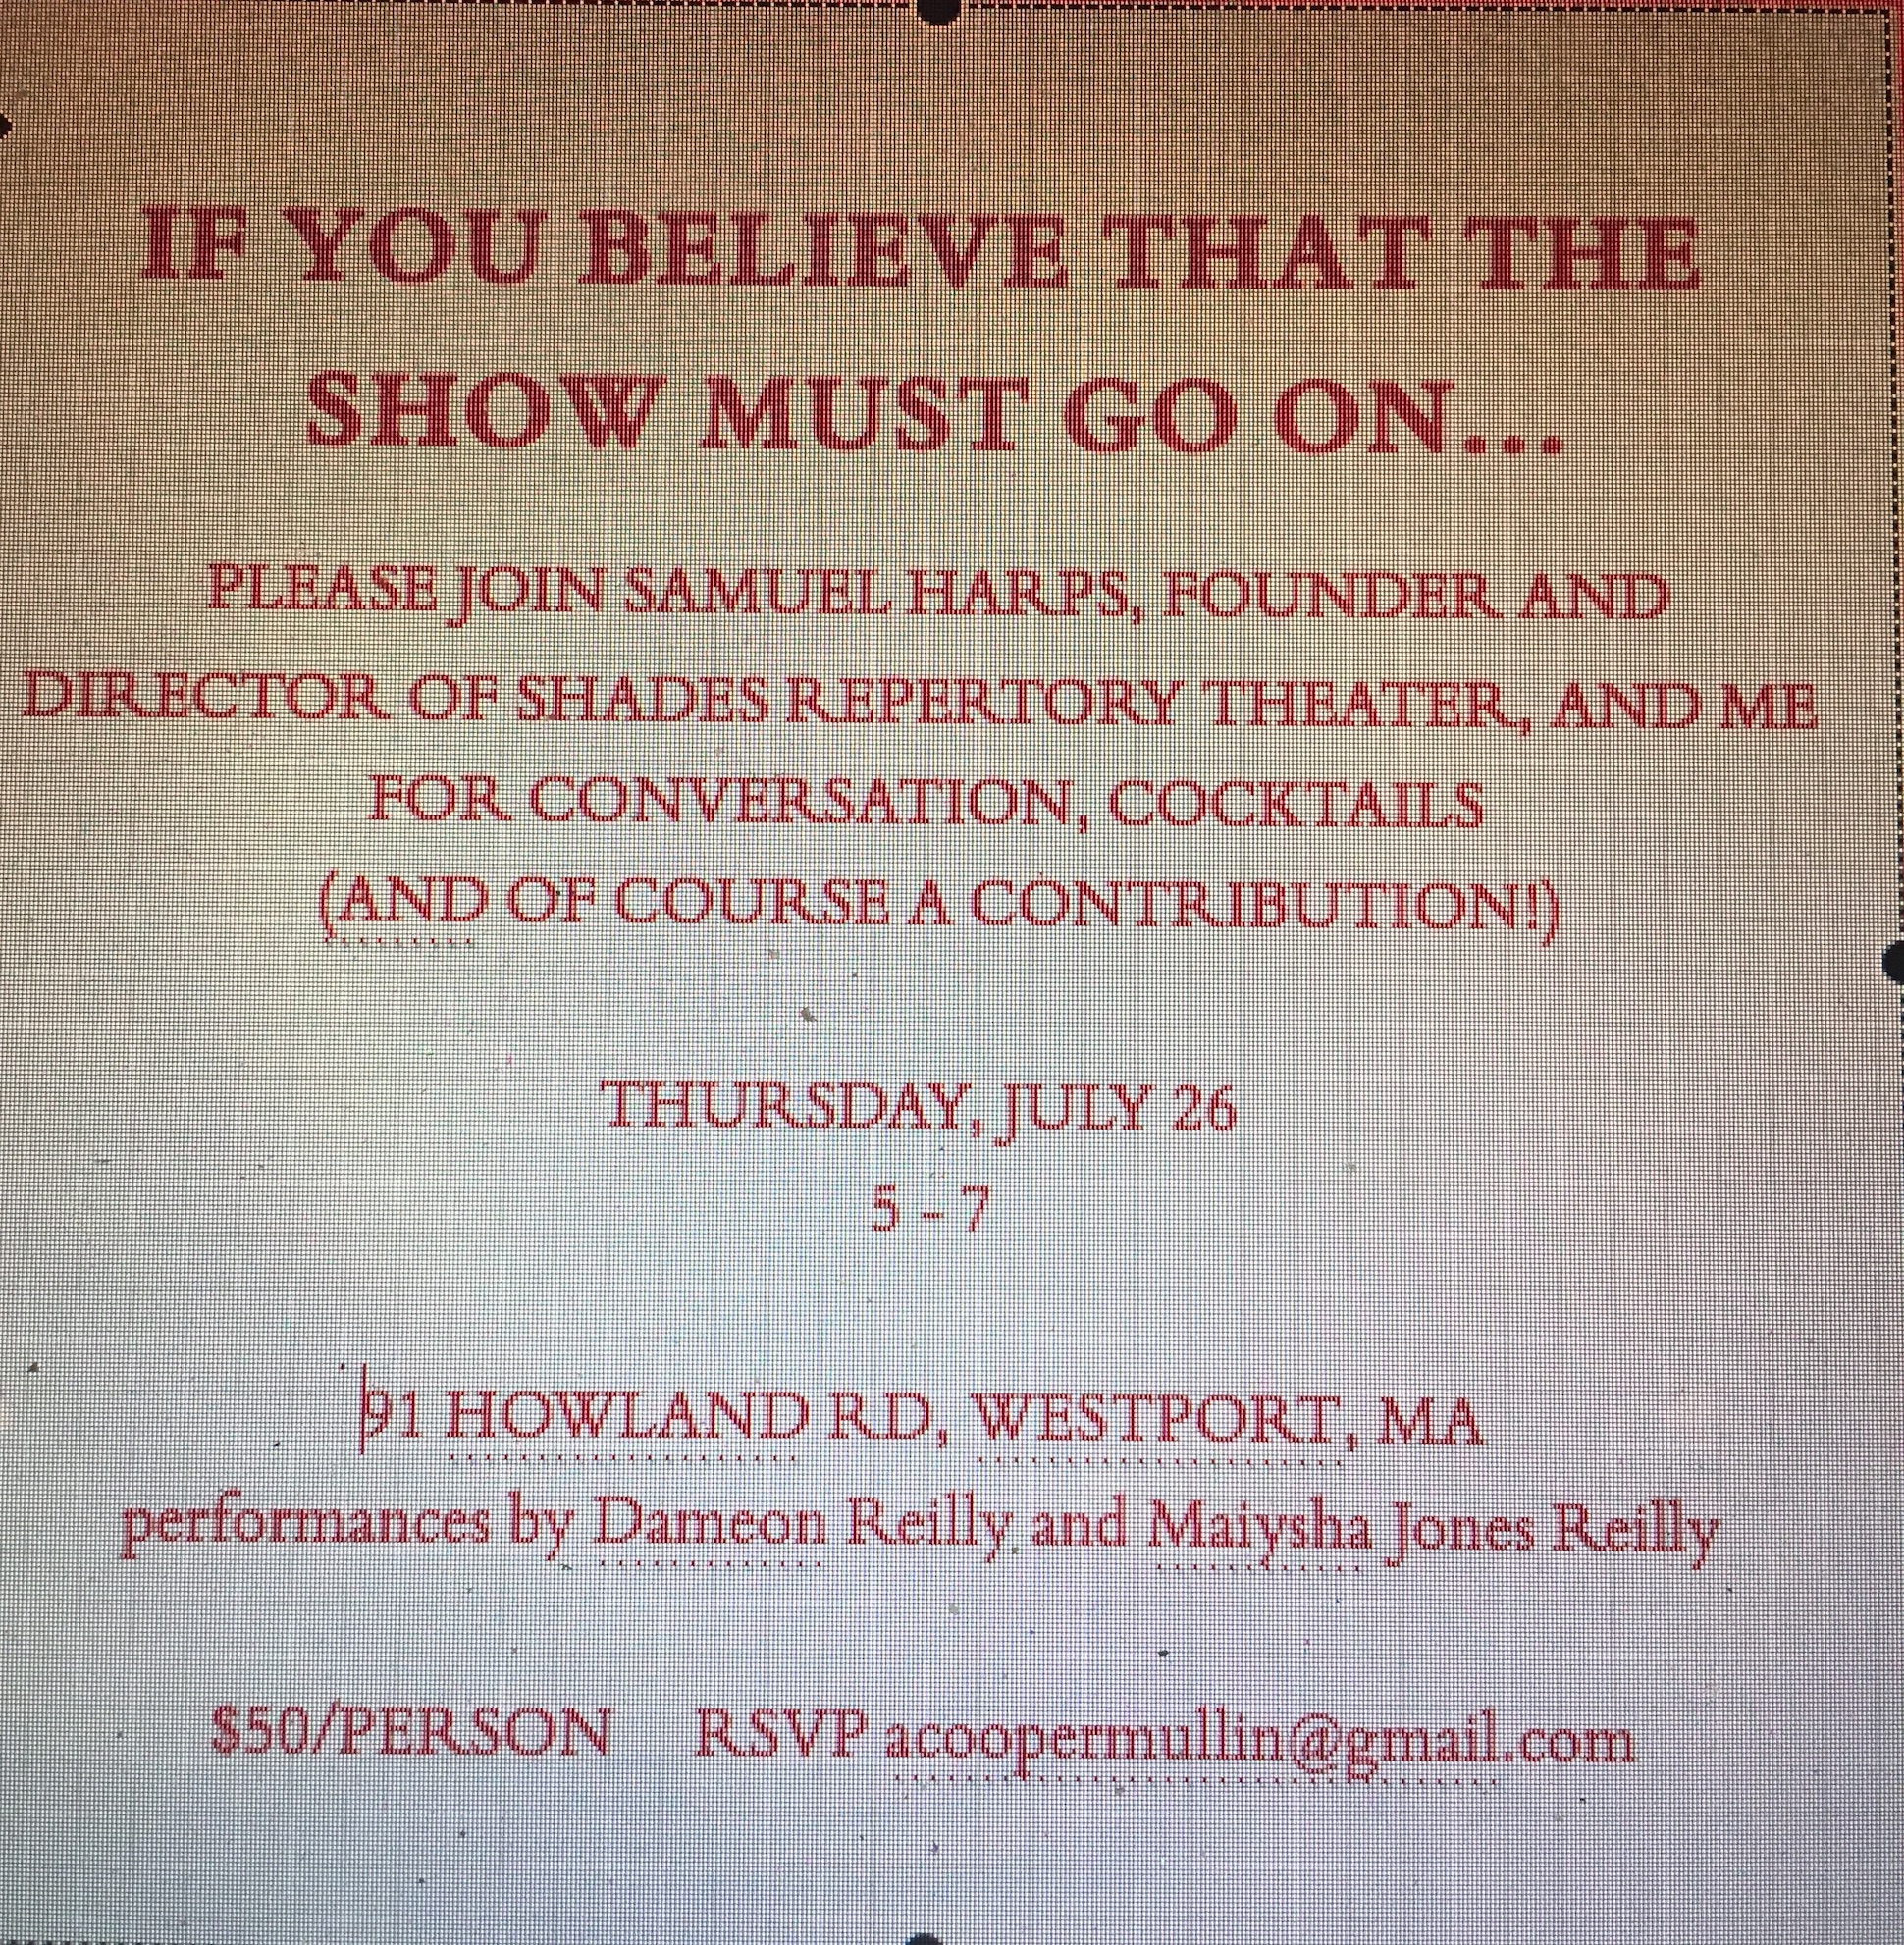 Shades Repertory Fundraiser in Westport, MA.